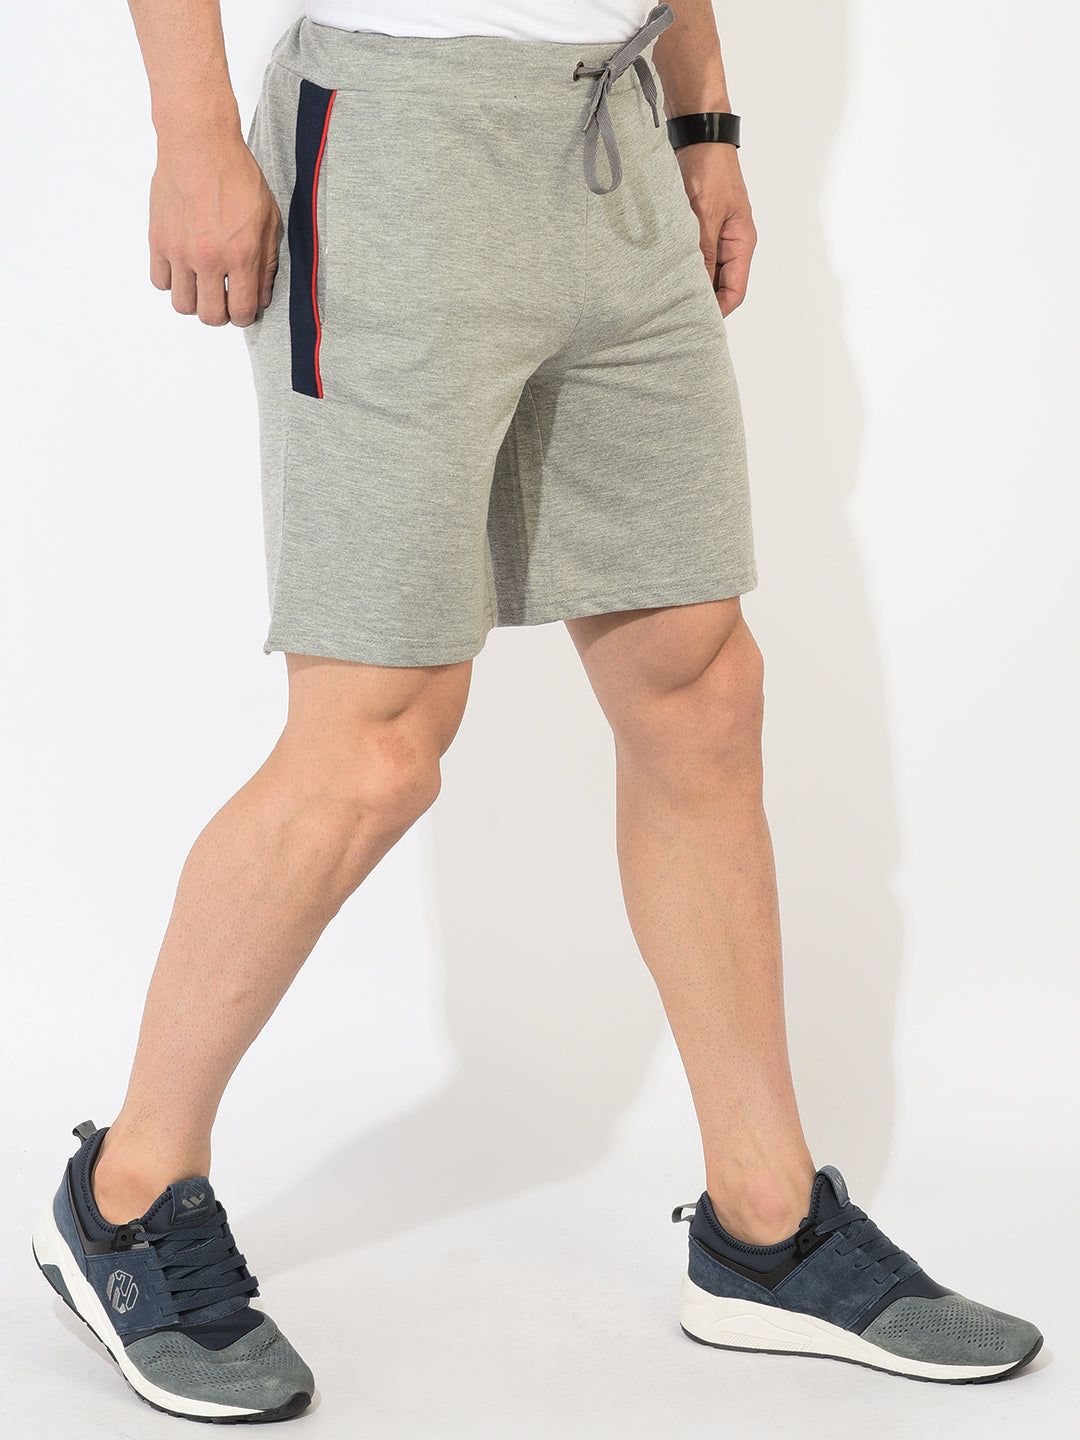 Cobb Grey Solid Shorts